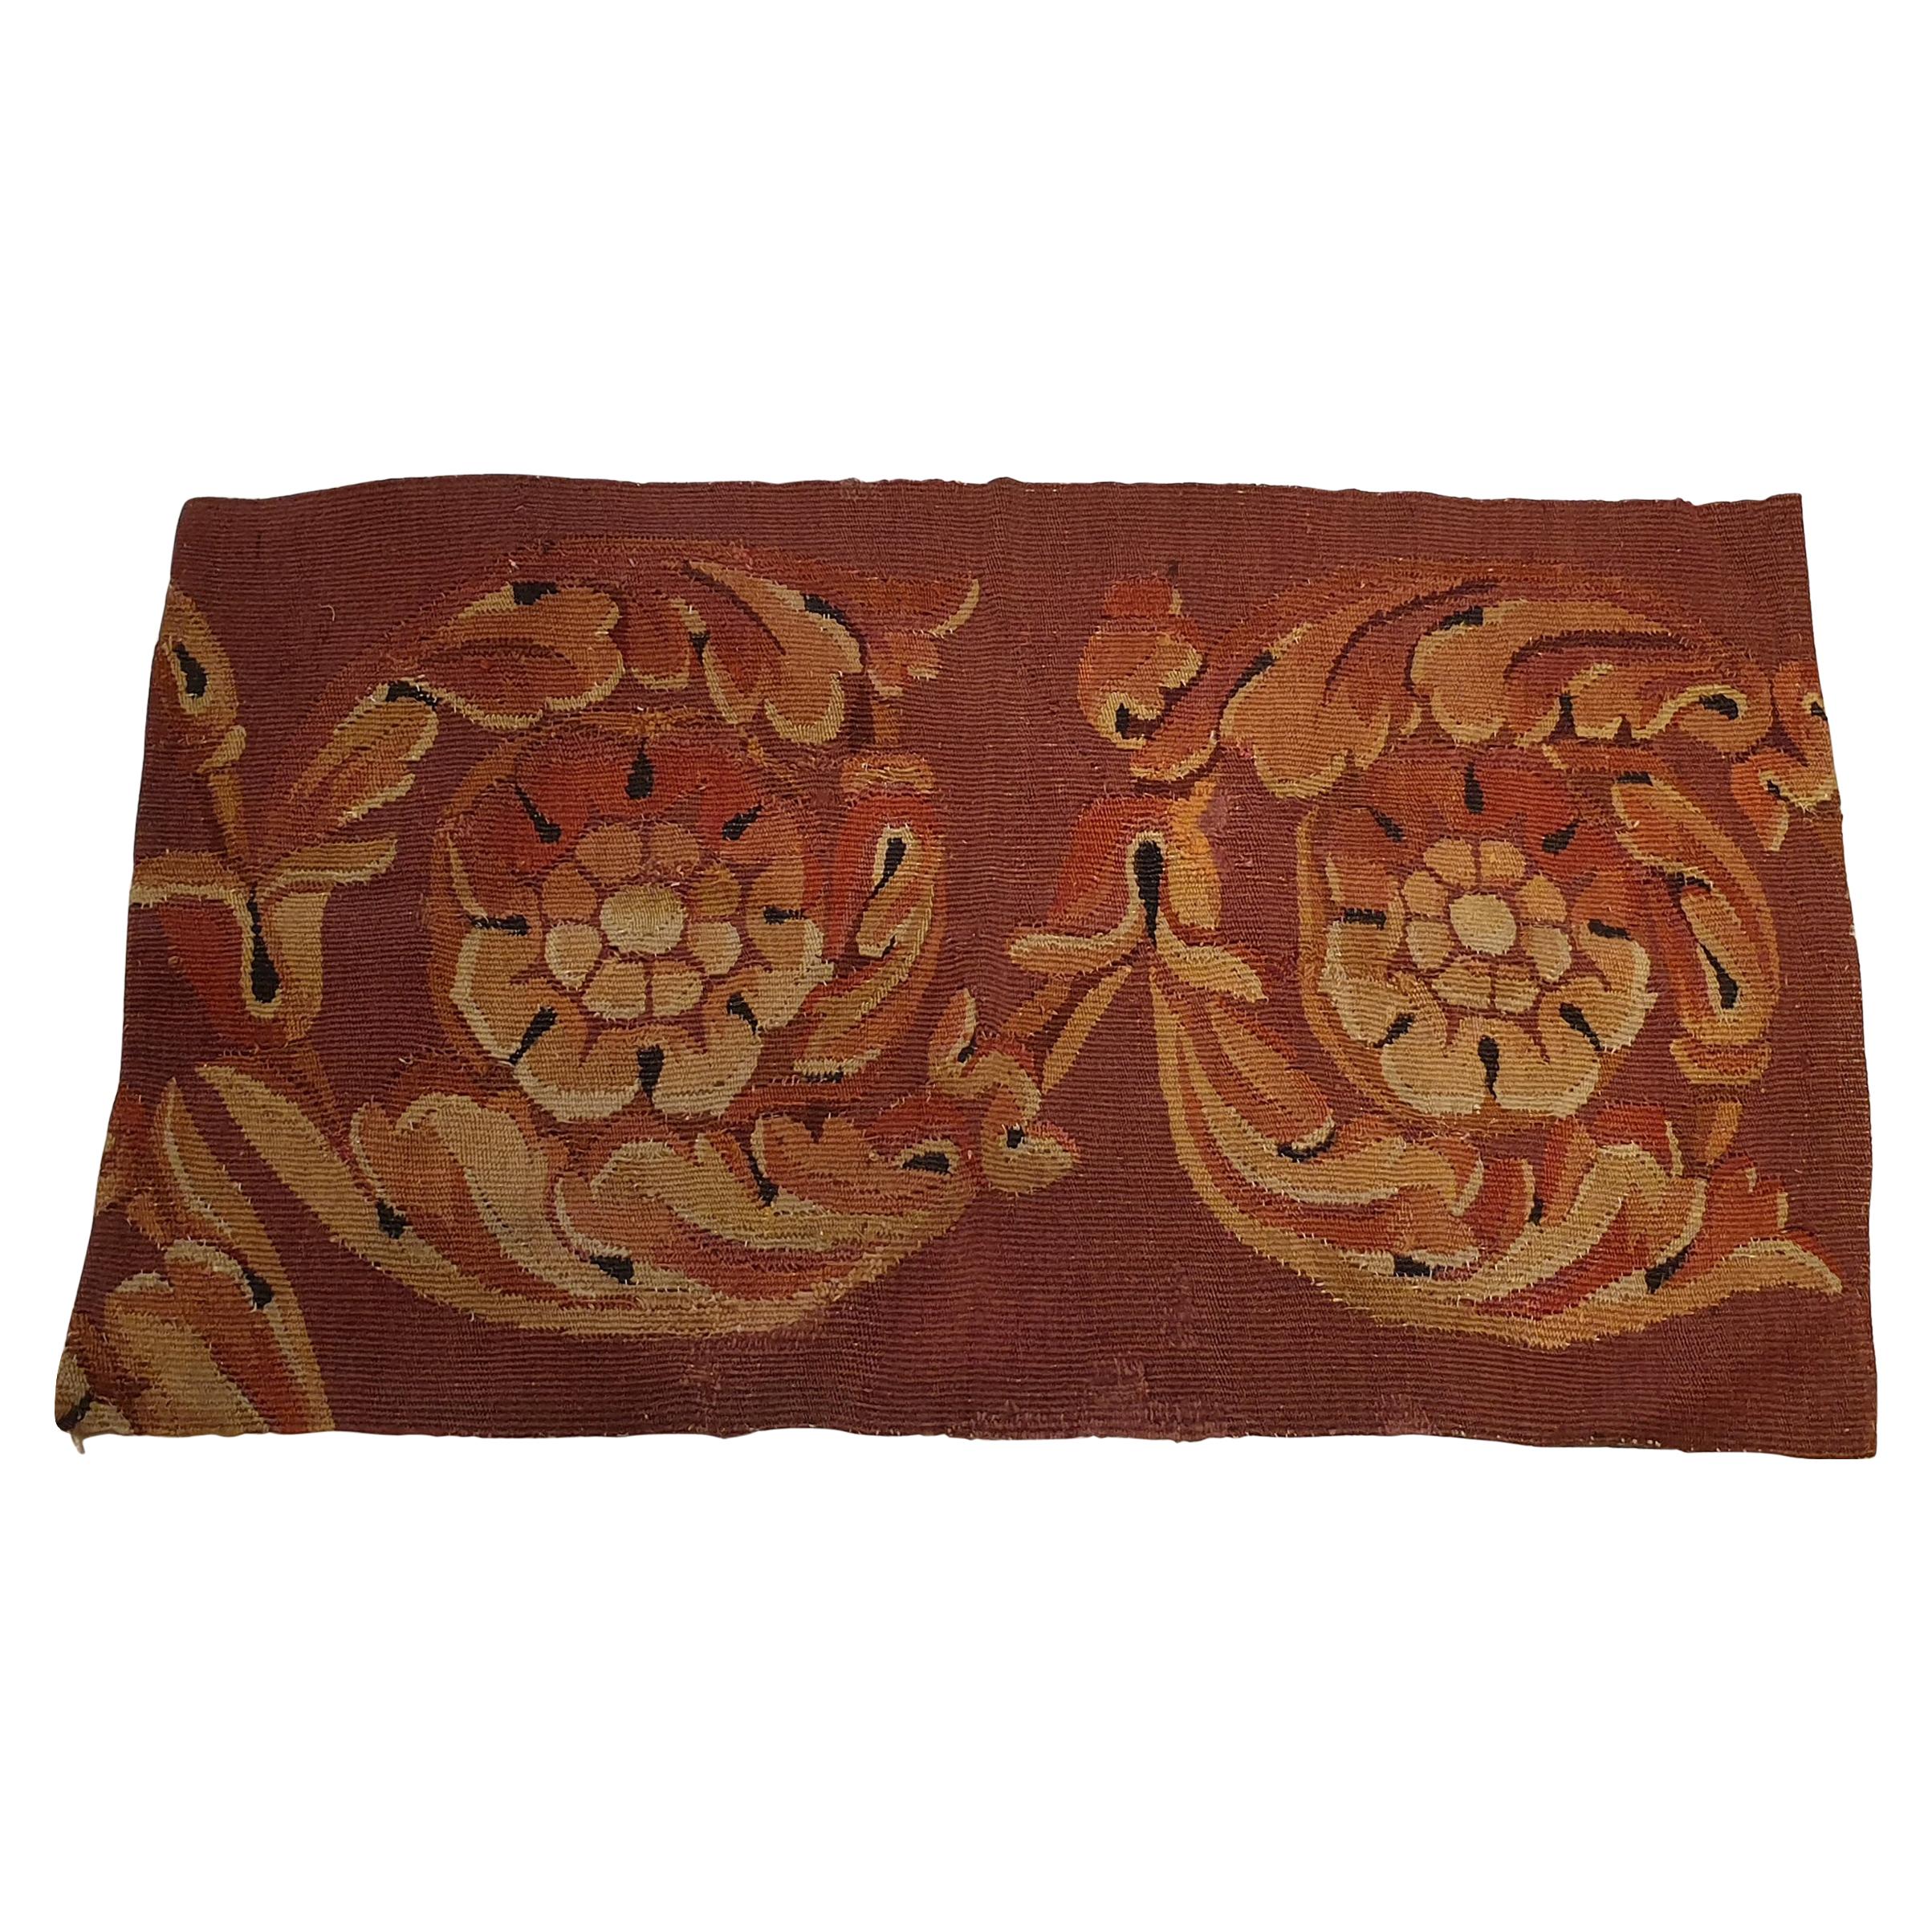 824 - 19th Century Aubusson Carpet Piece